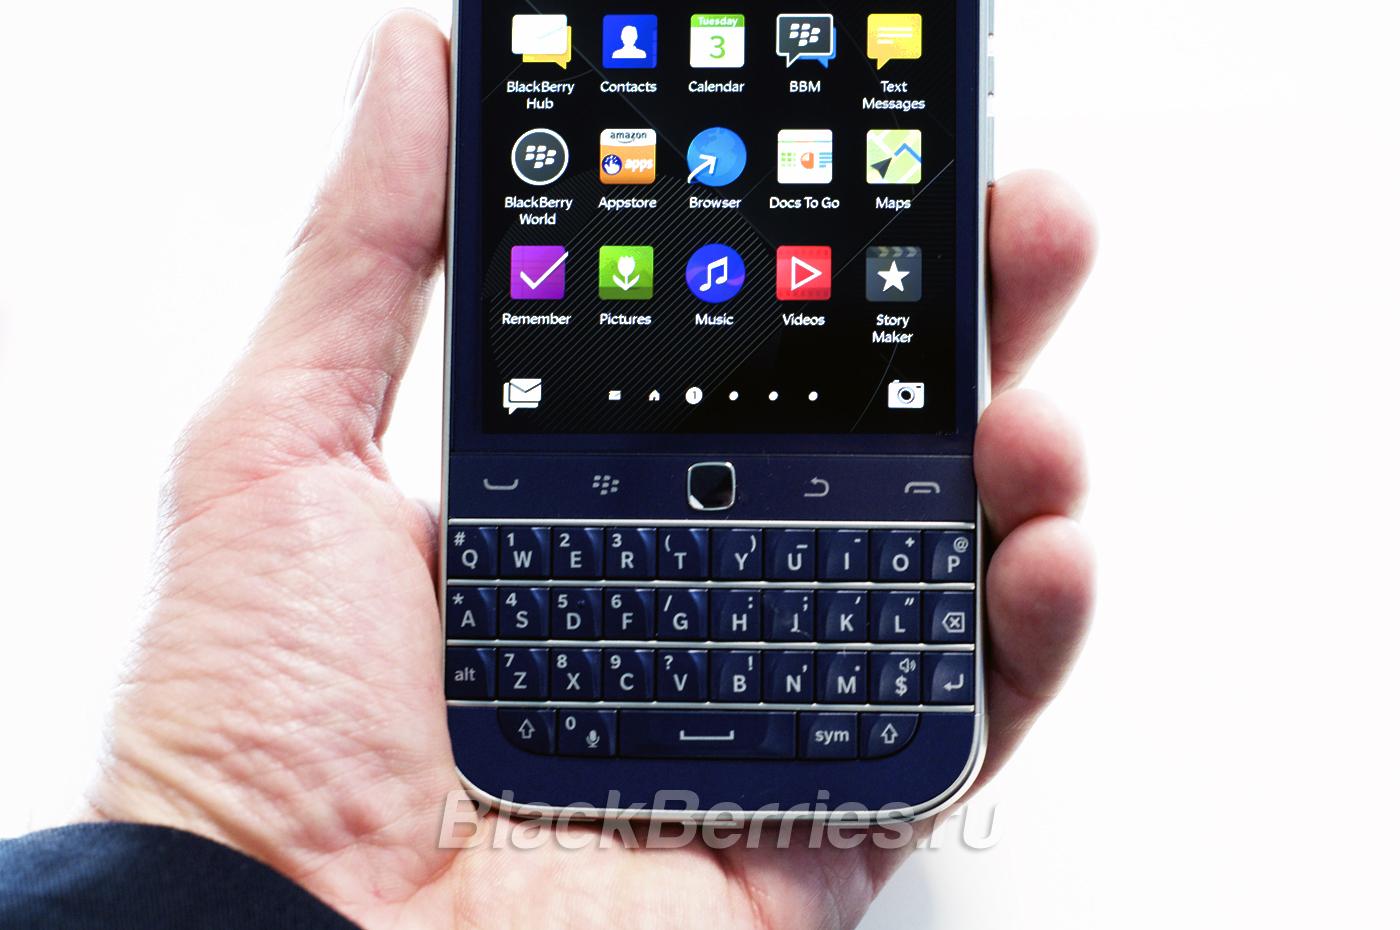 BlackBerry-Classic-Blue